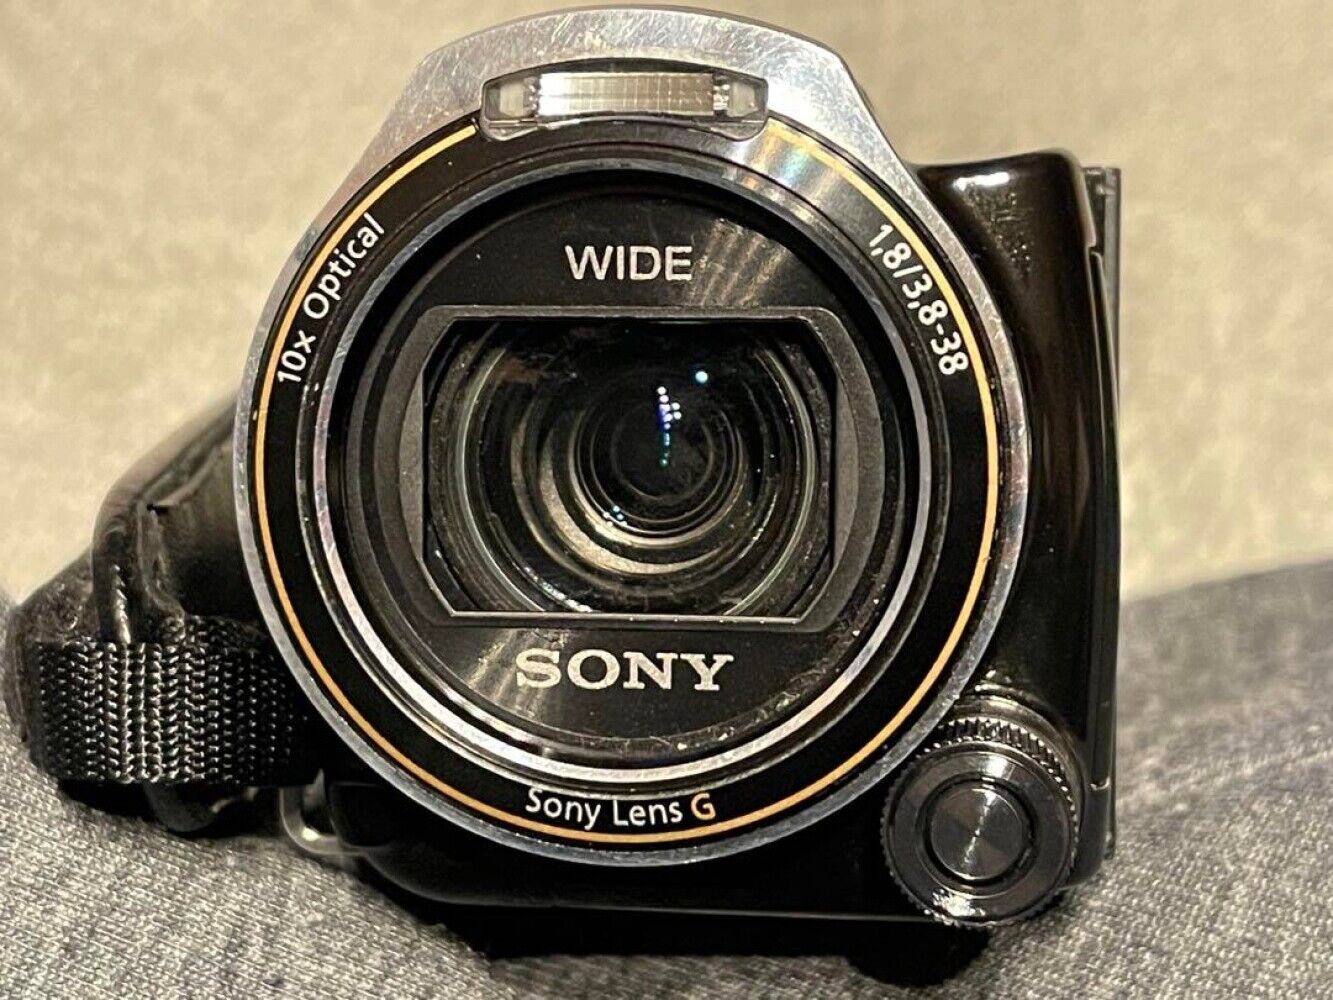 SONY Handycam HDR-CX560V Digital Video Camera Black Used japan